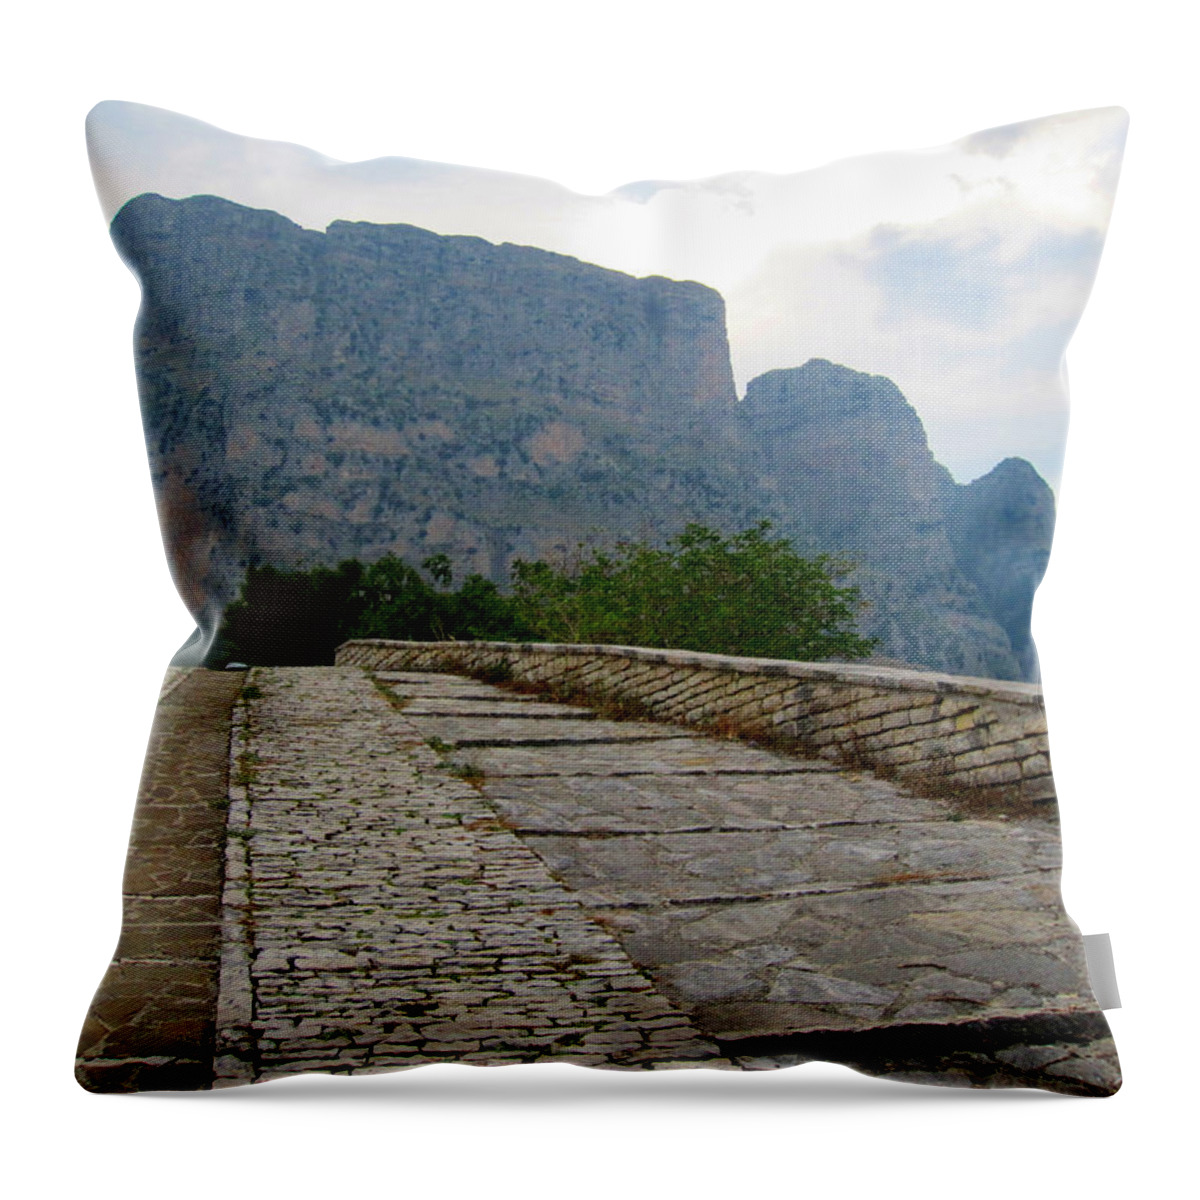 Alexandros Daskalakis Throw Pillow featuring the photograph A Road to the Mountains by Alexandros Daskalakis